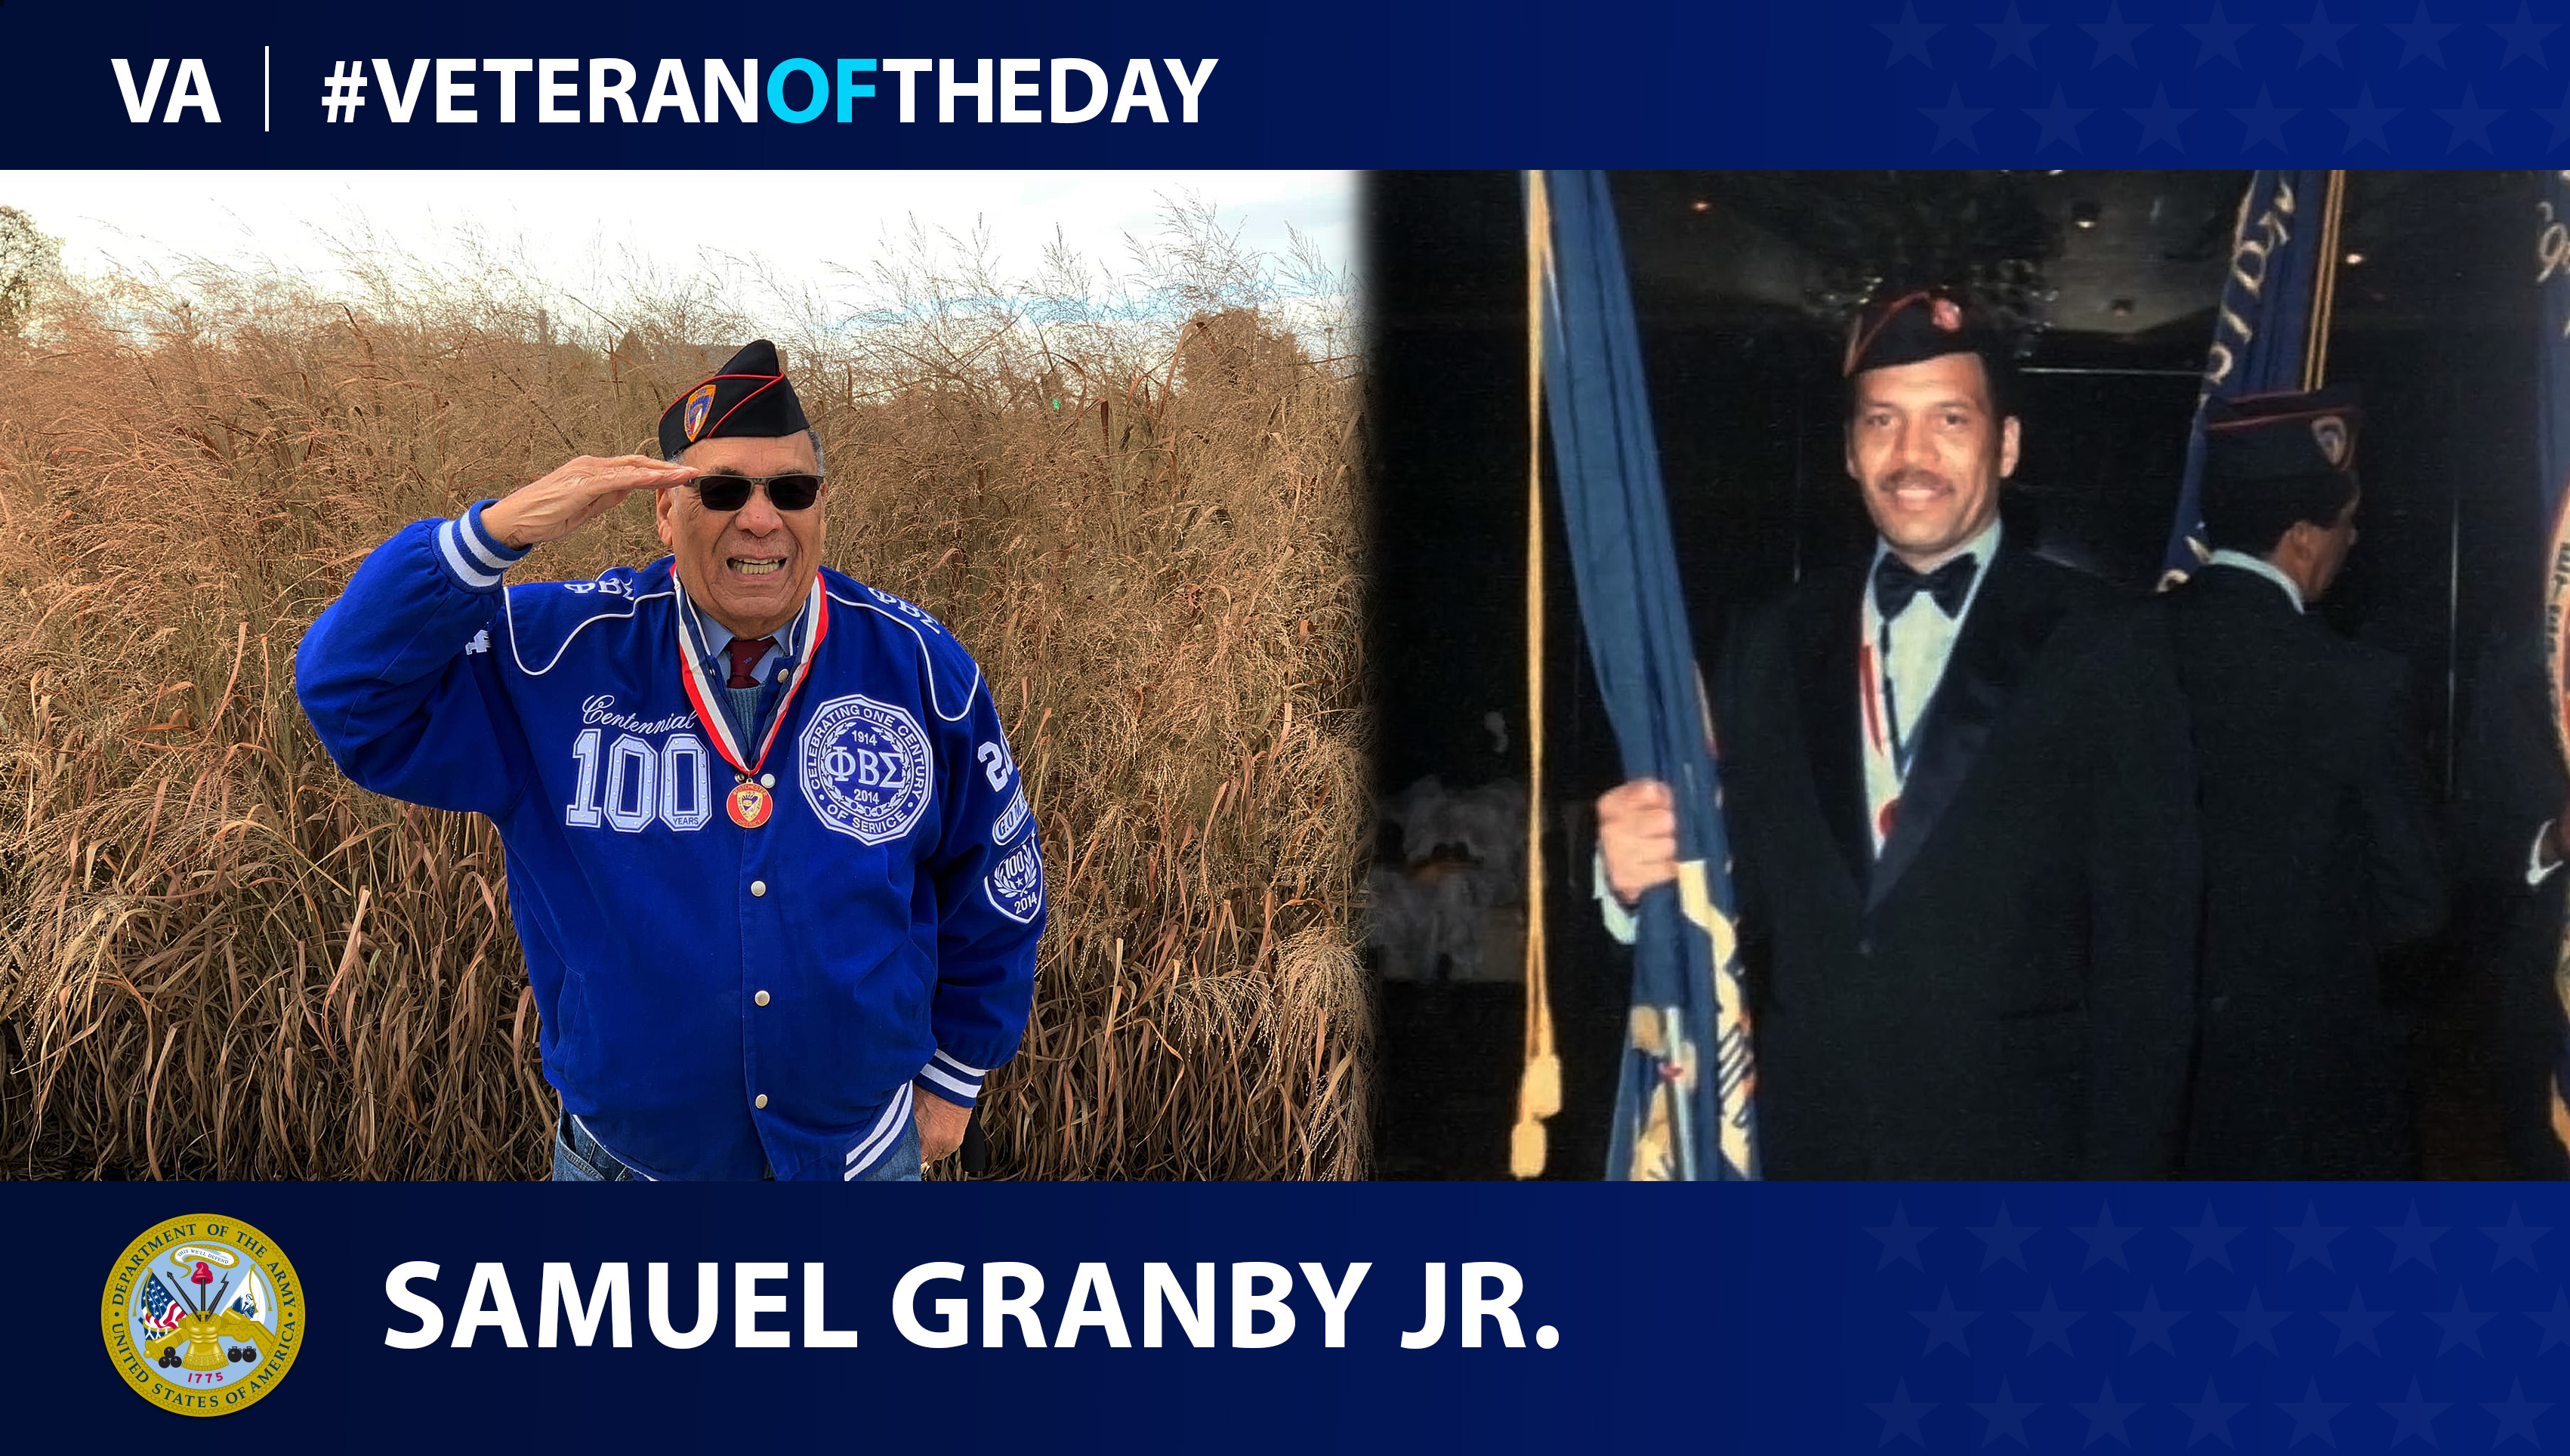 Army Veteran Samuel Granby Jr. is today's Veteran of the Day.